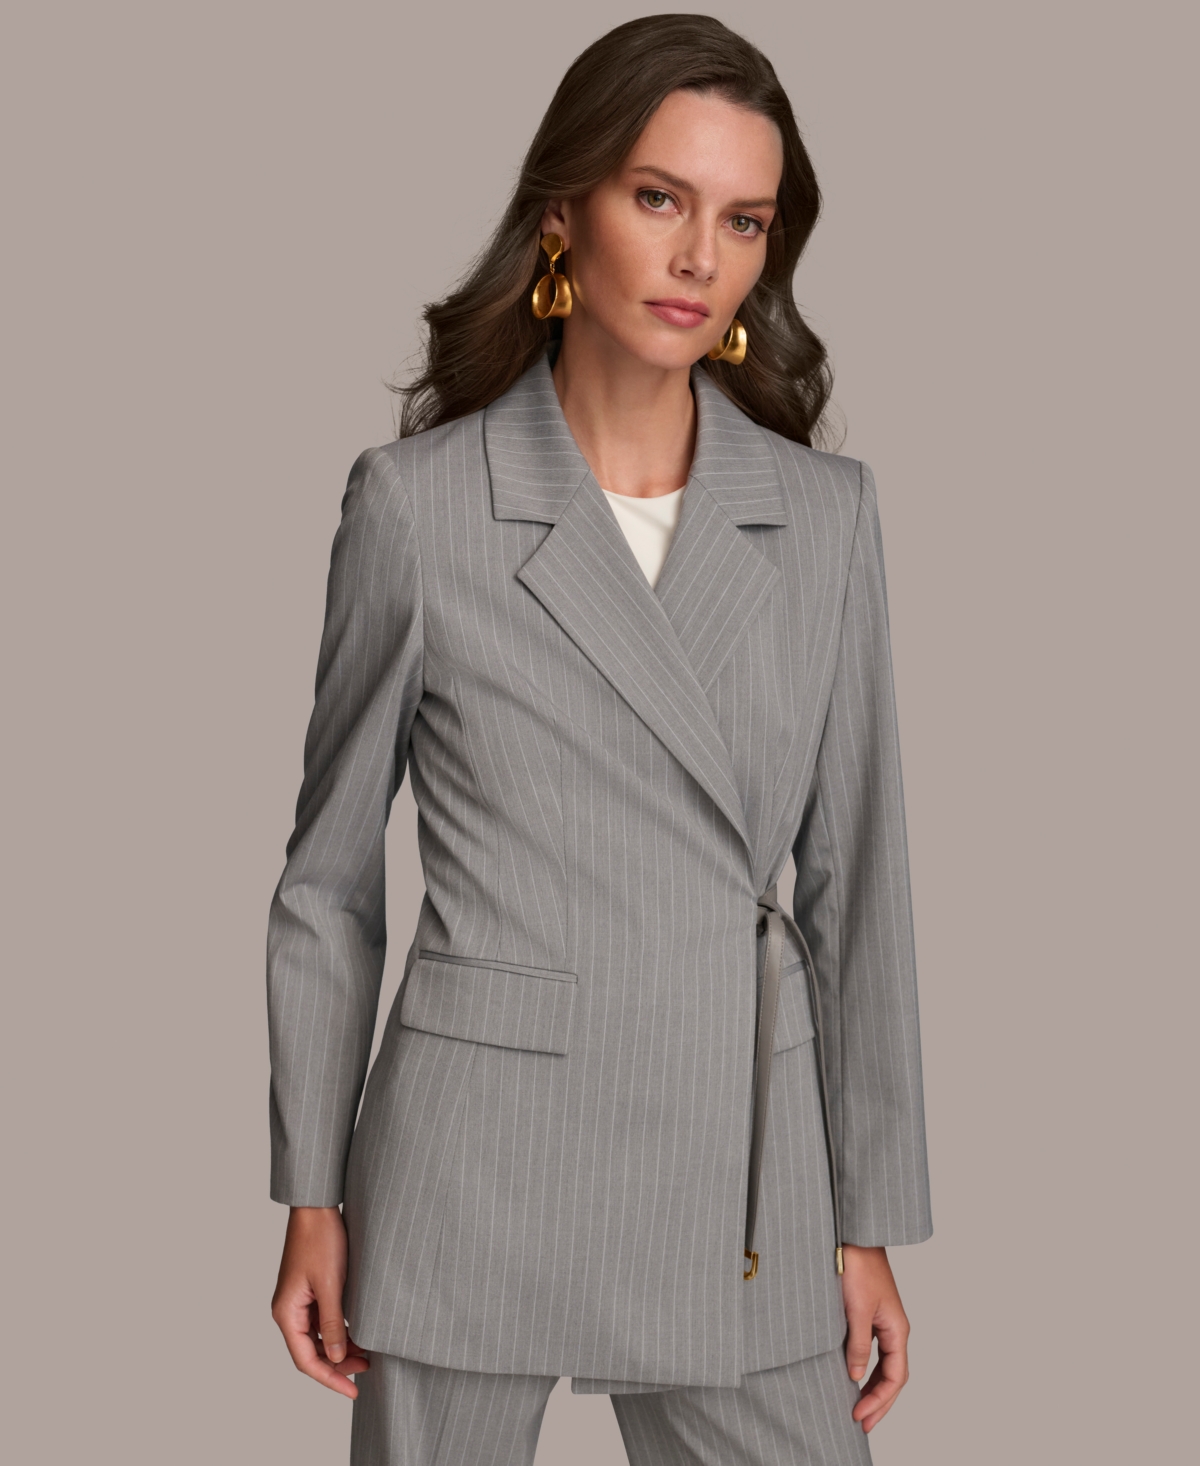 Women's Pinstriped Tie-Waist Blazer - Light Gray/White